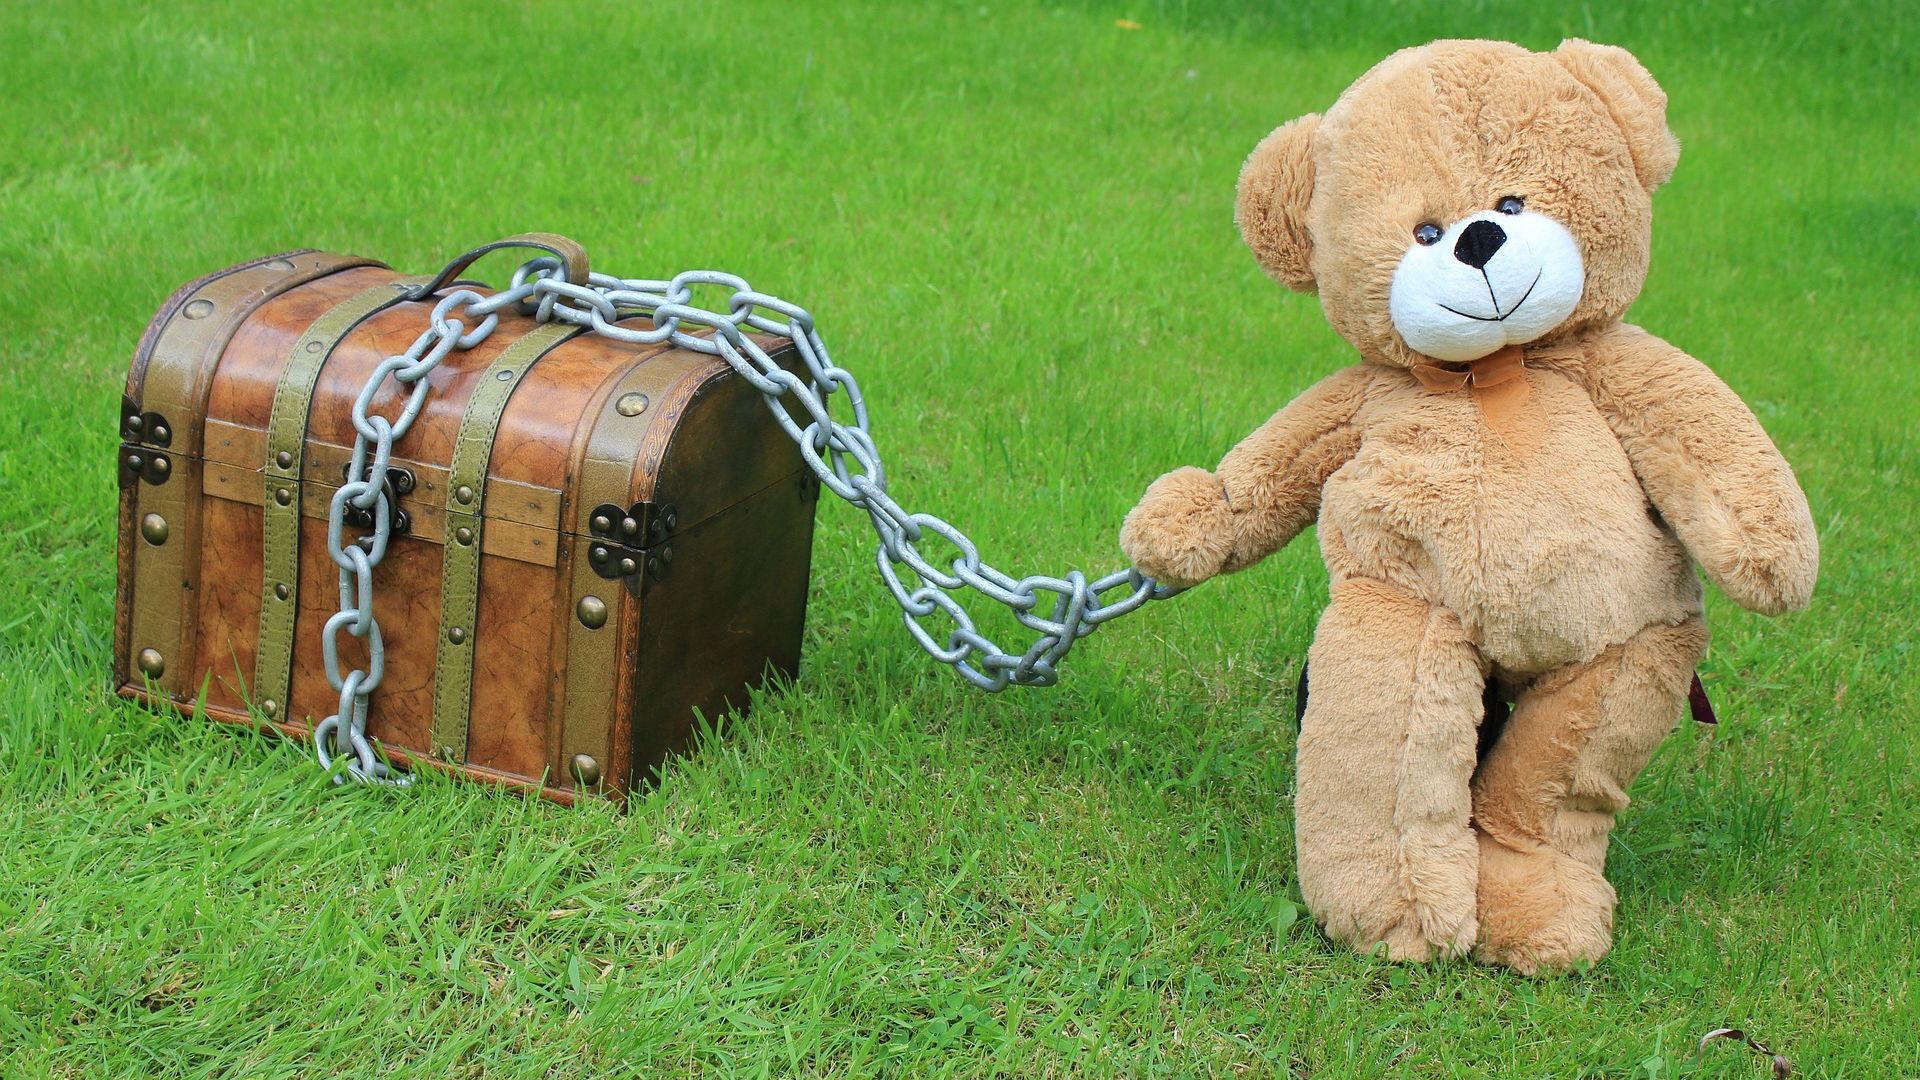 teddy bear wallpaper,teddy bear,drum,grass,stuffed toy,membranophone